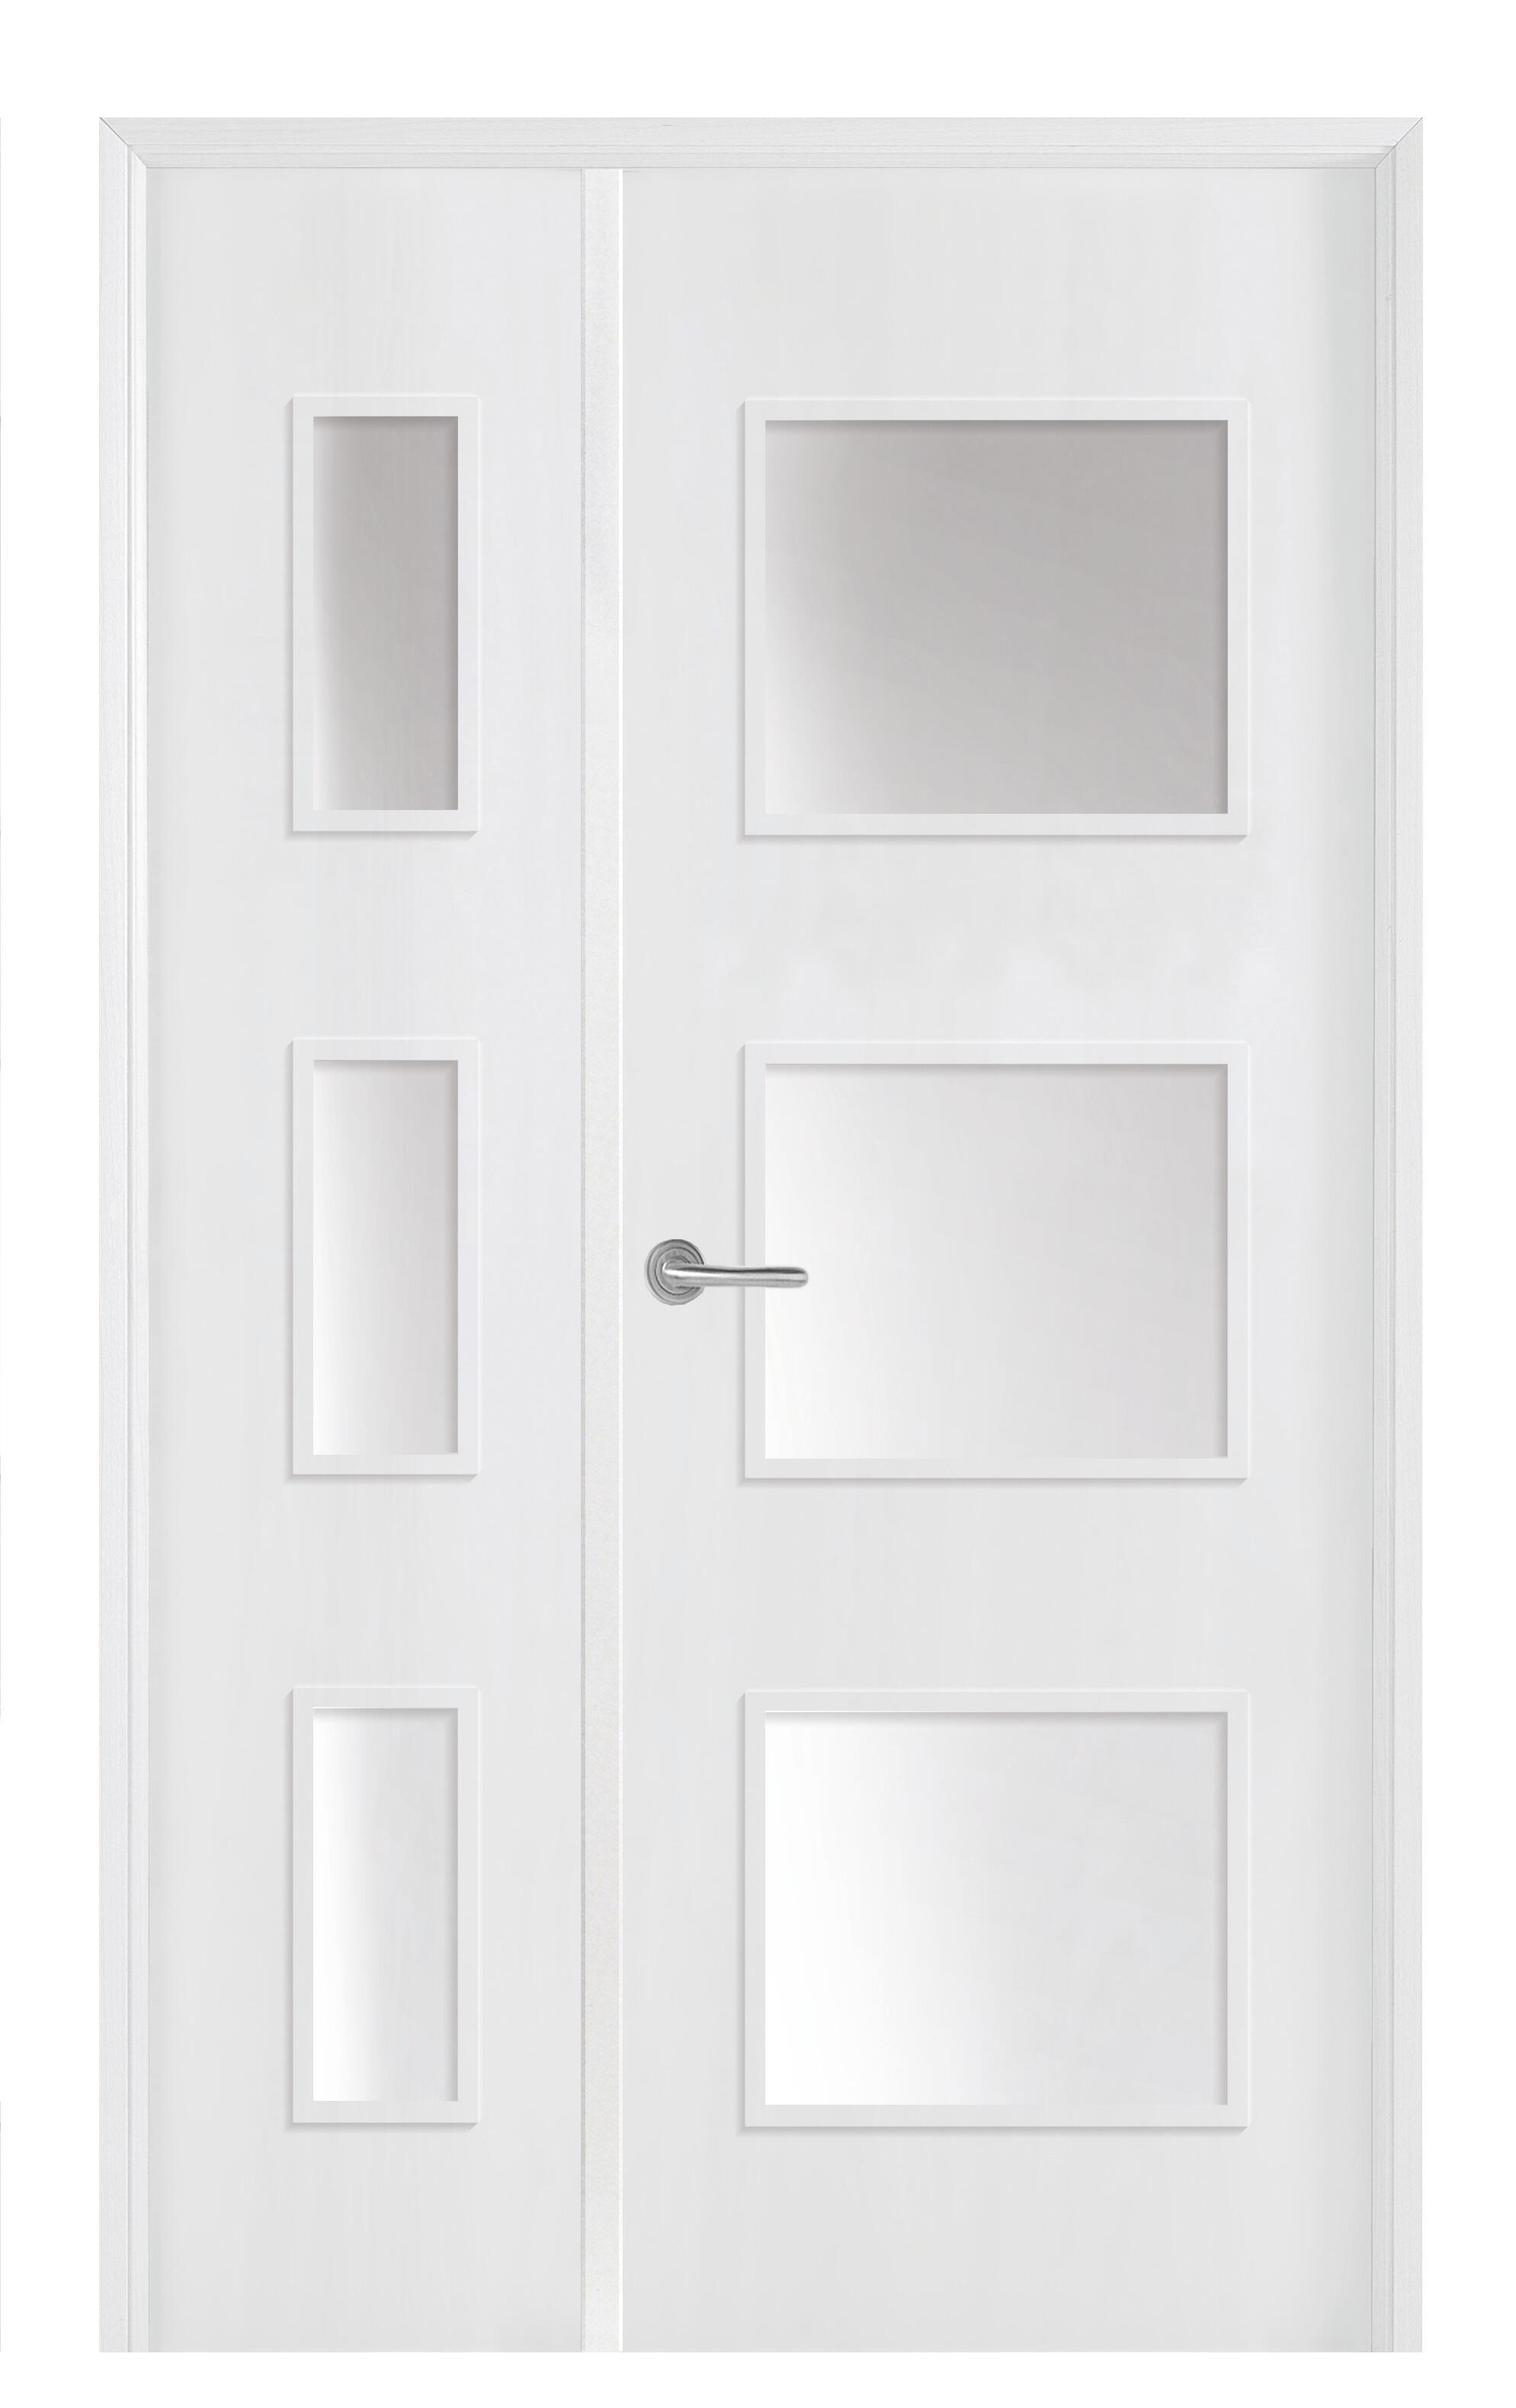 Puerta doble con cristal bari plus blanca 7x2x125cm i